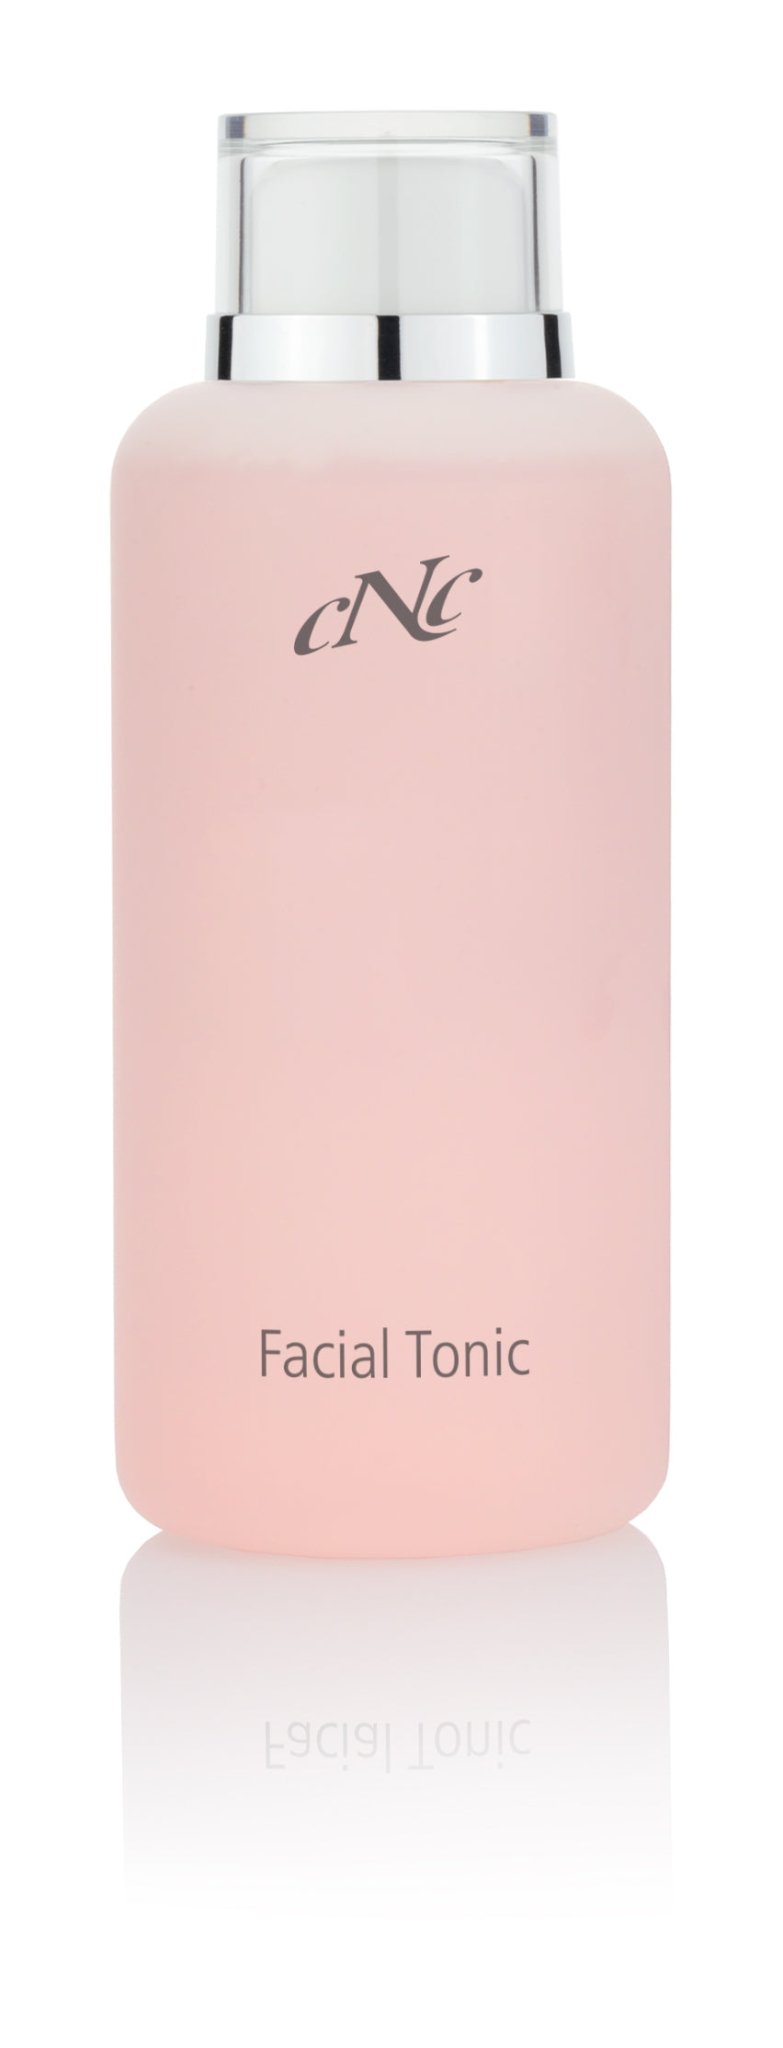 CNC aesthetic world Facial Tonic, 200 ml - Doriana Cosmetics GmbH